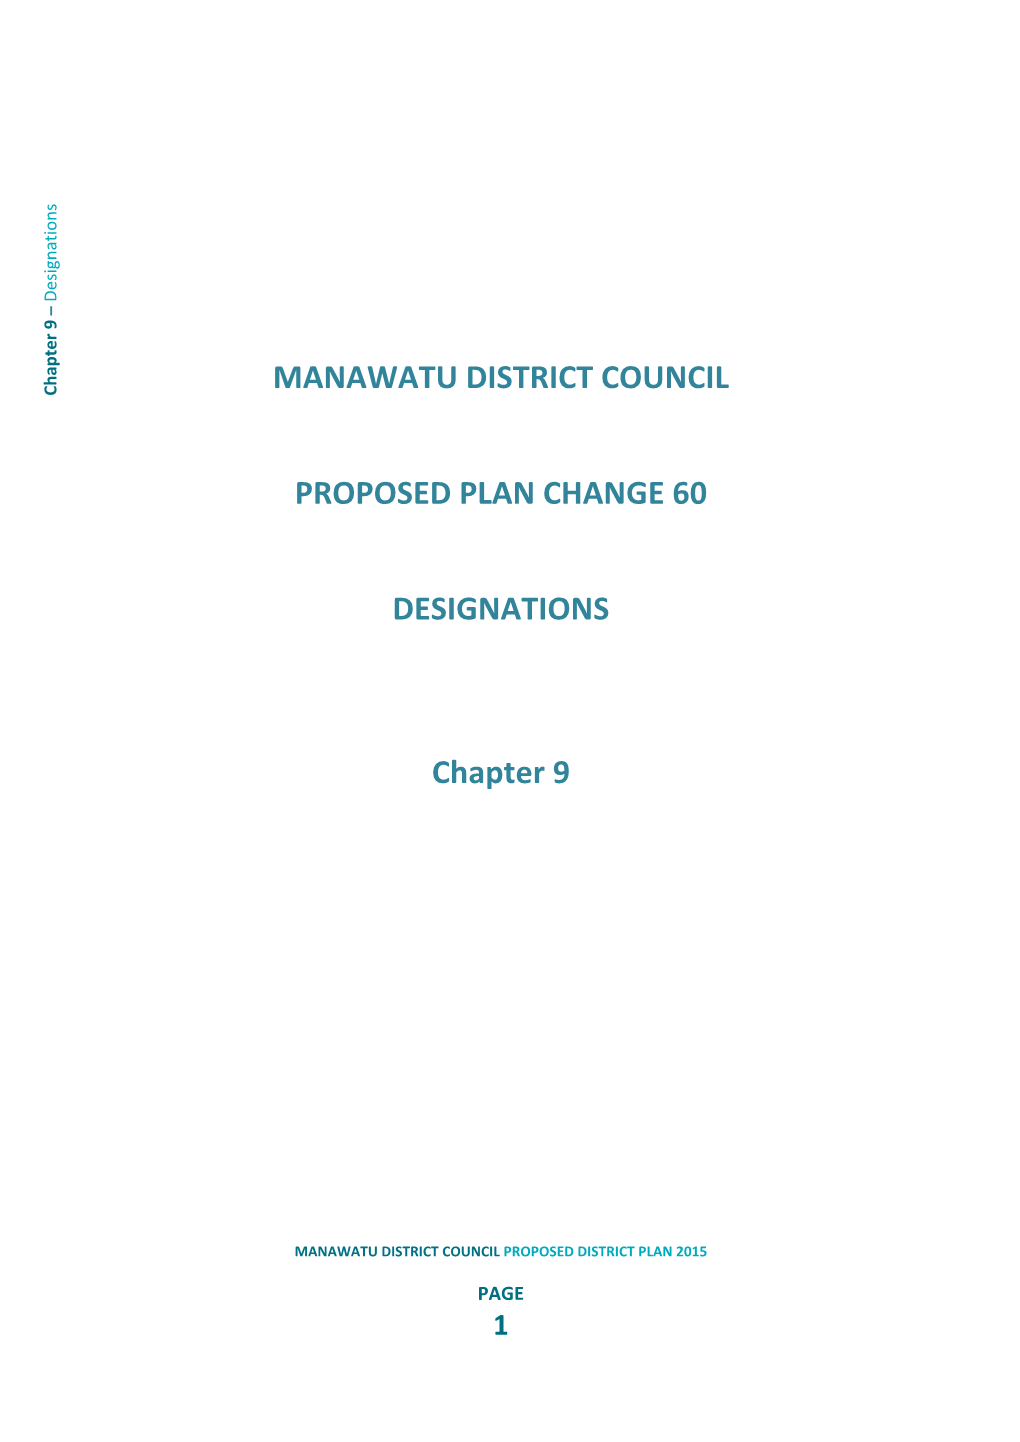 Manawatu District Council Proposed Plan Change 60